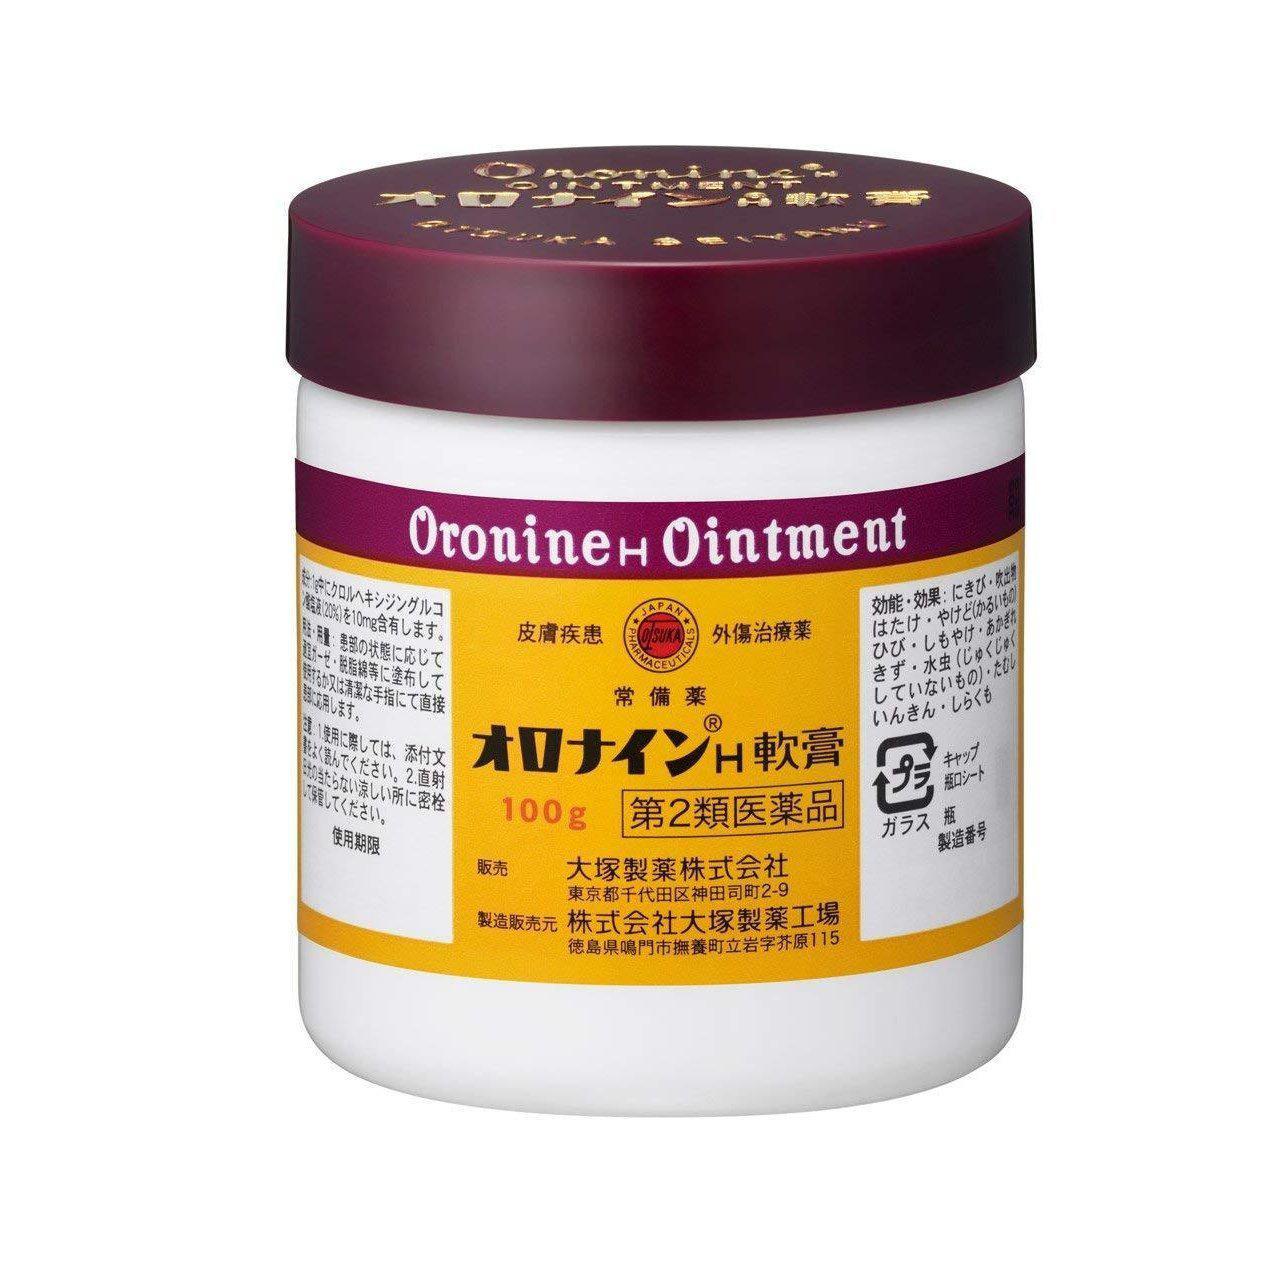 Otsuka Oronine H Ointment 100g